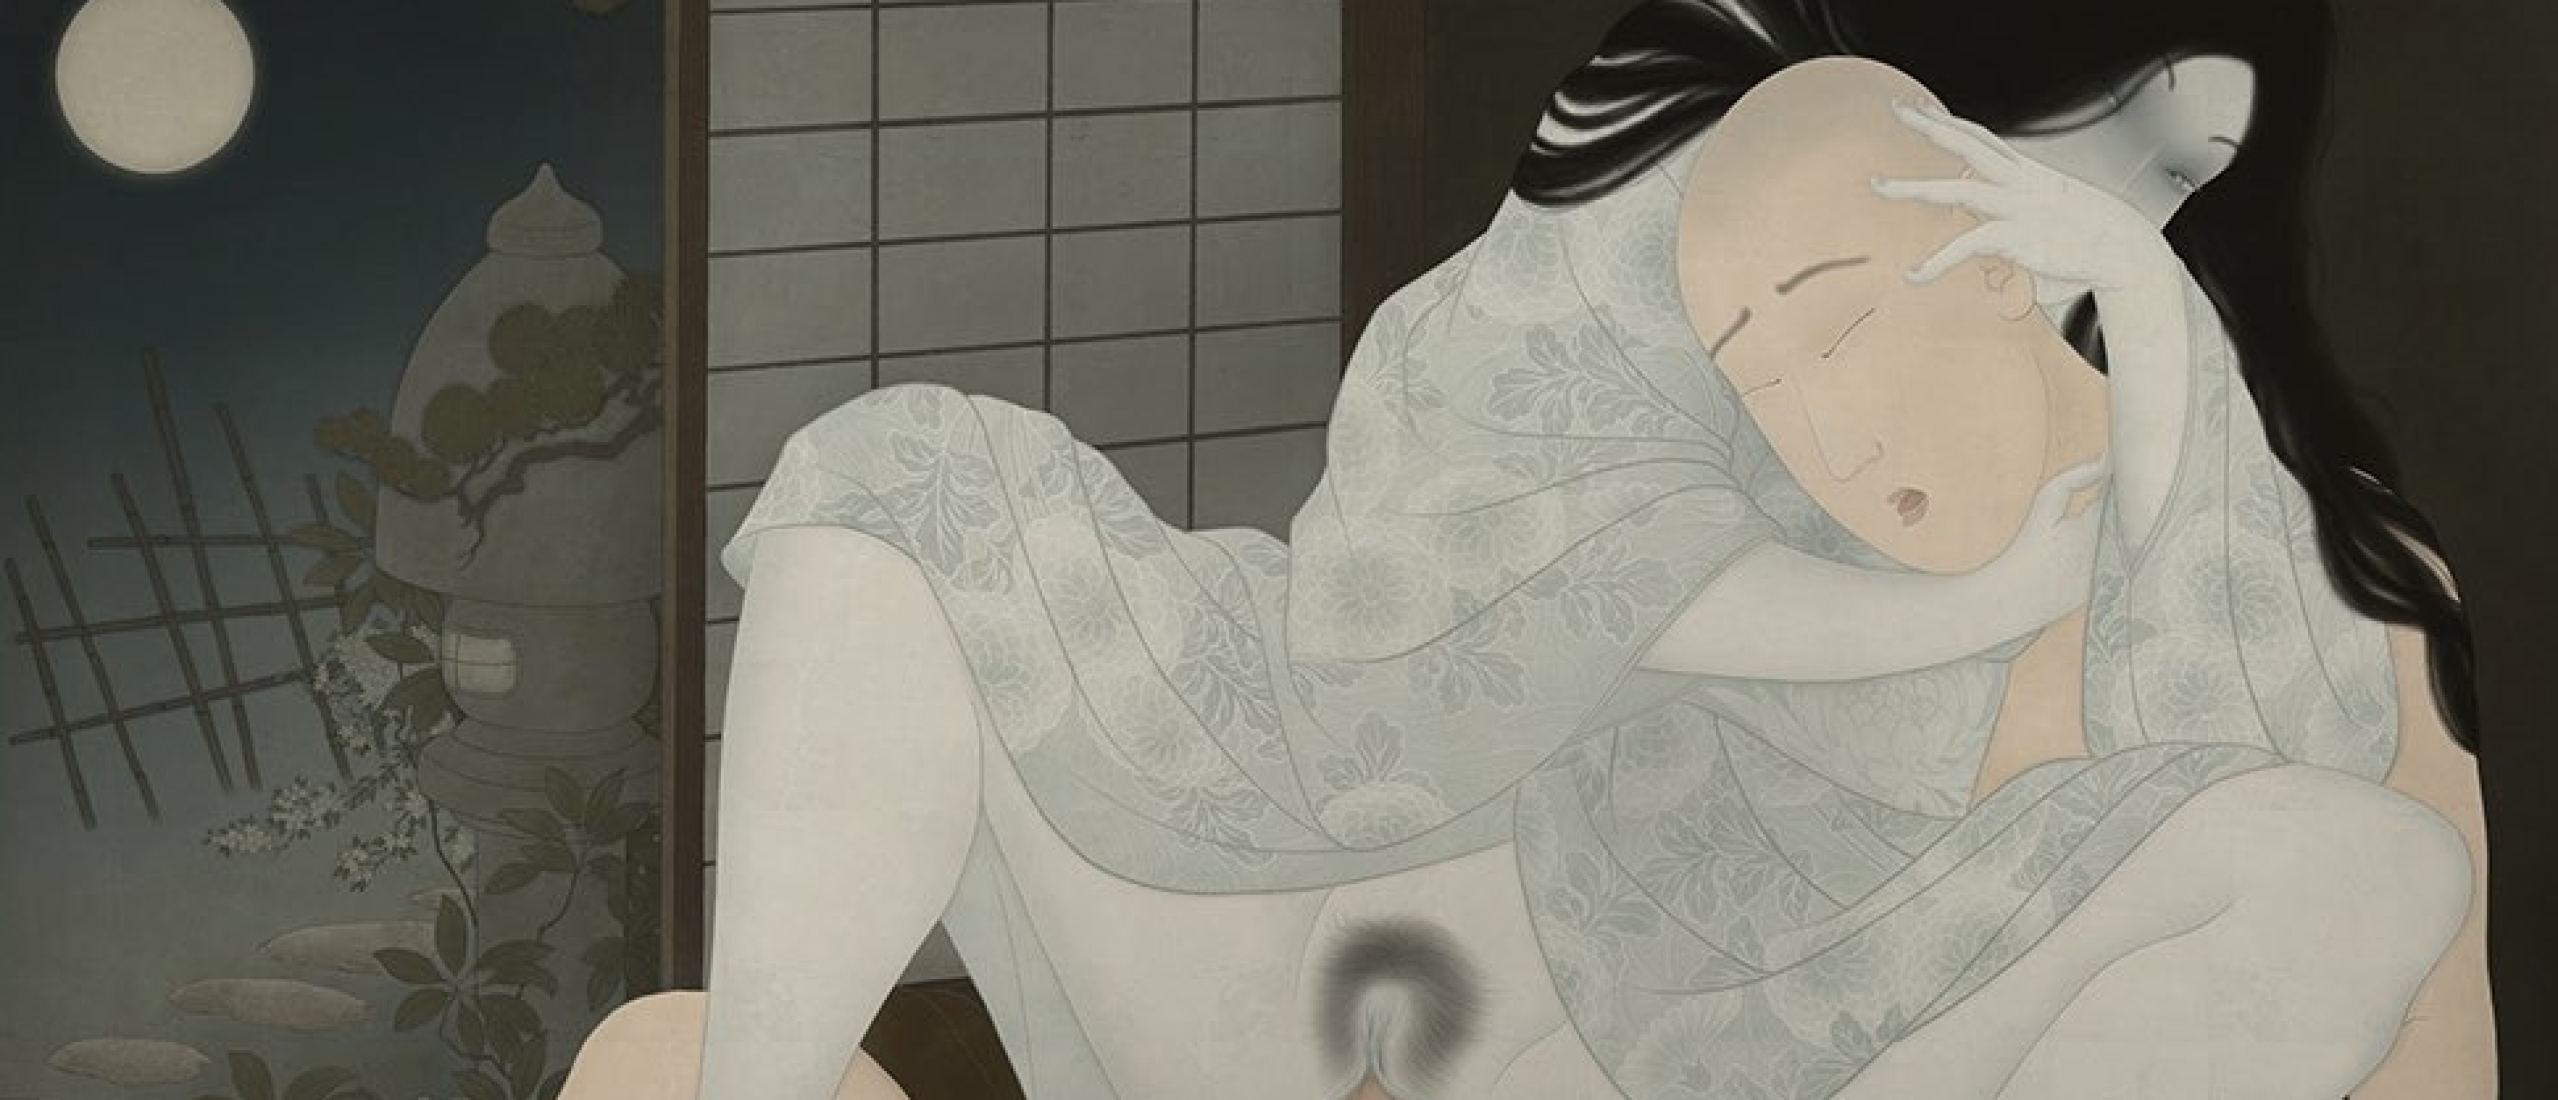 Yuuwaku: The Temptation of a Female Ghost by Senju Shunga